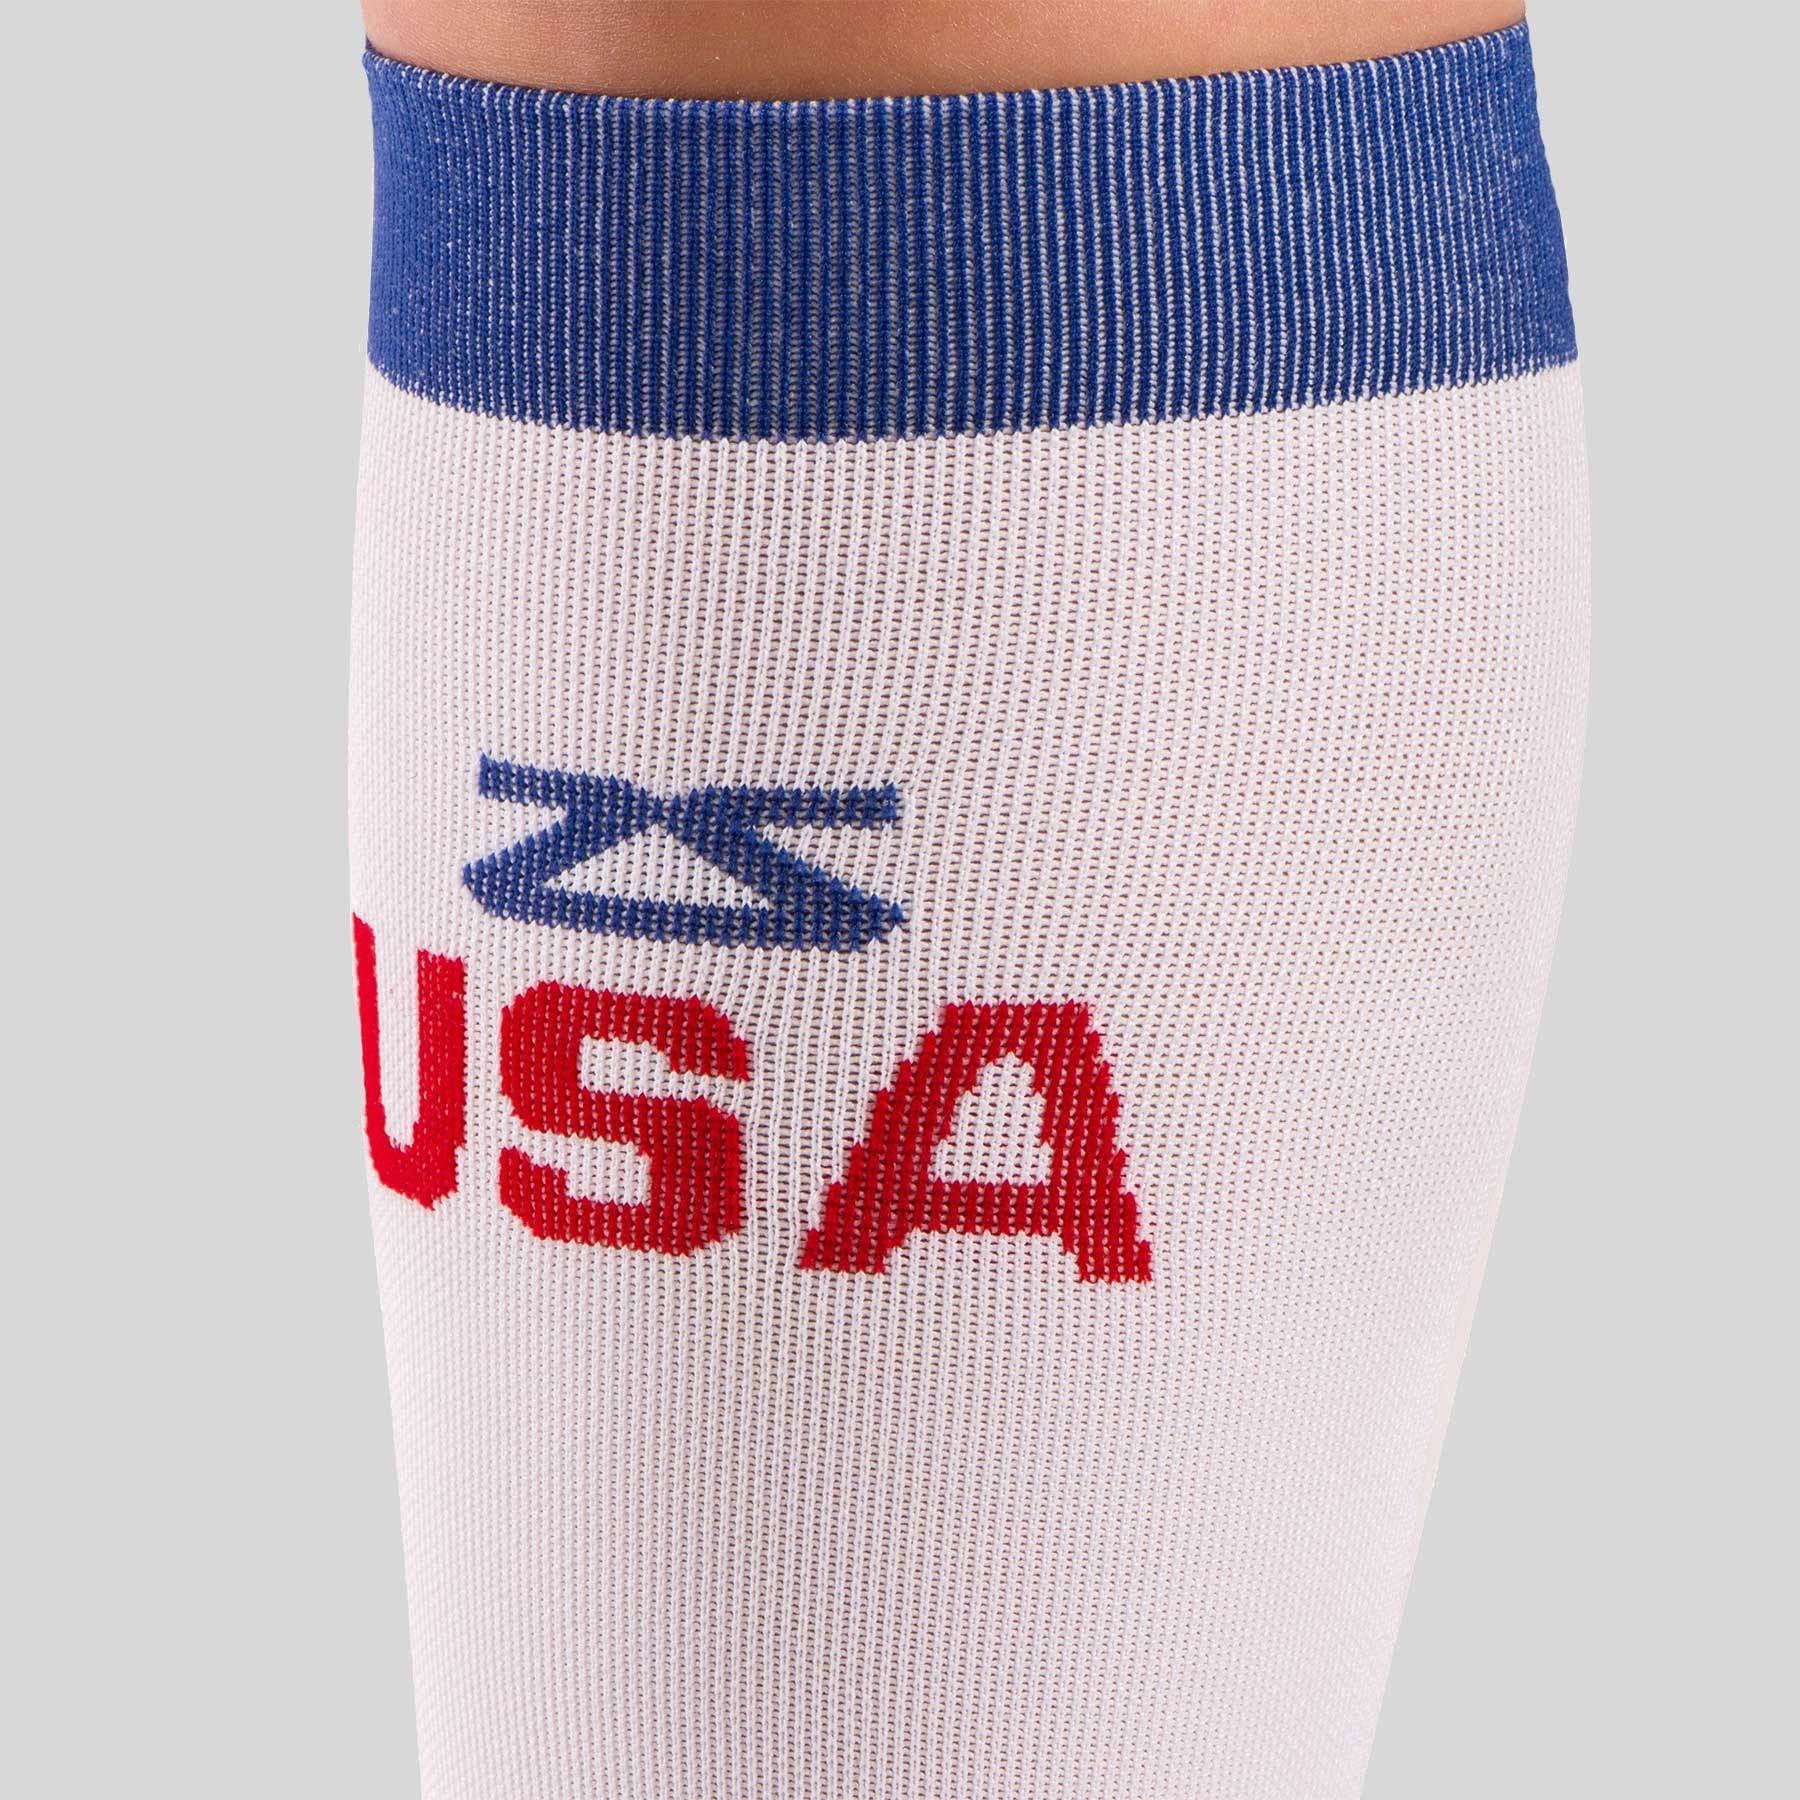 USA Compression Leg SleevesLeg Sleeves - Zensah